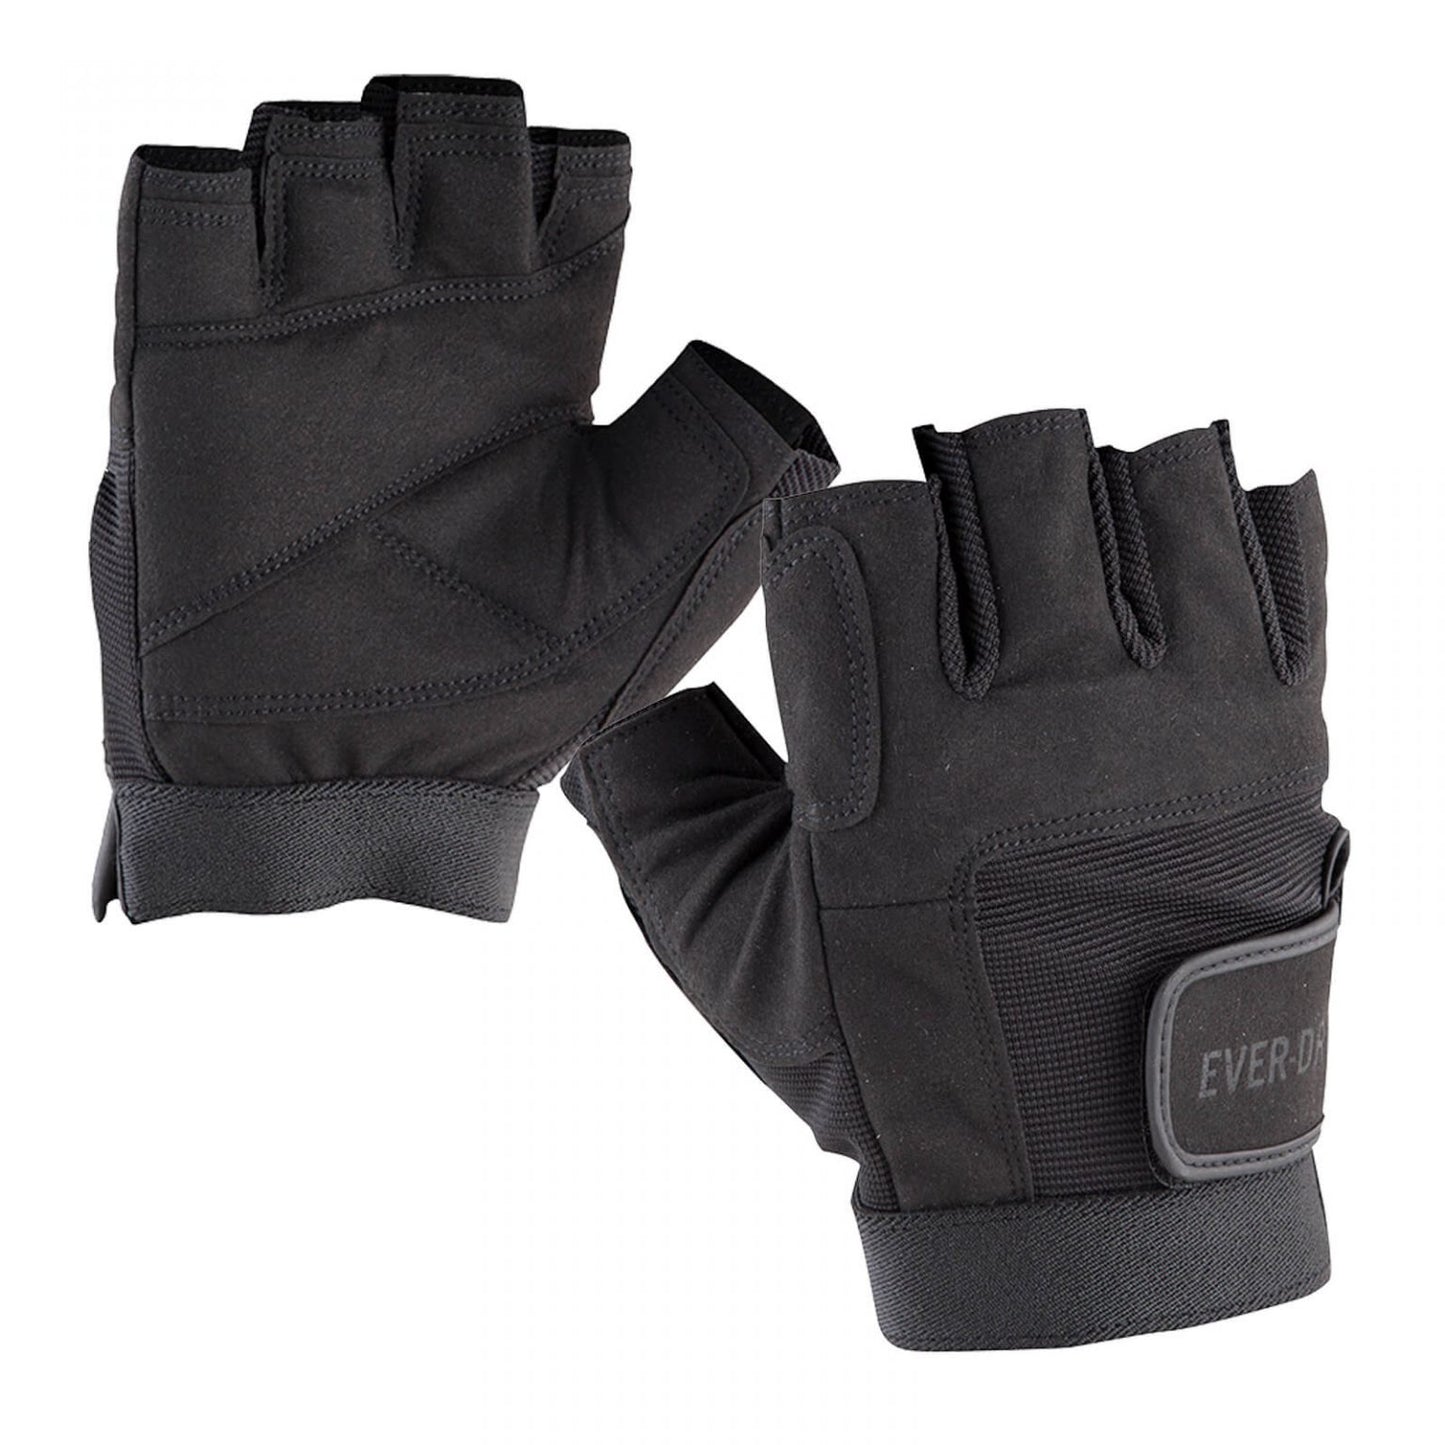 Fairhope EverDri Gloves